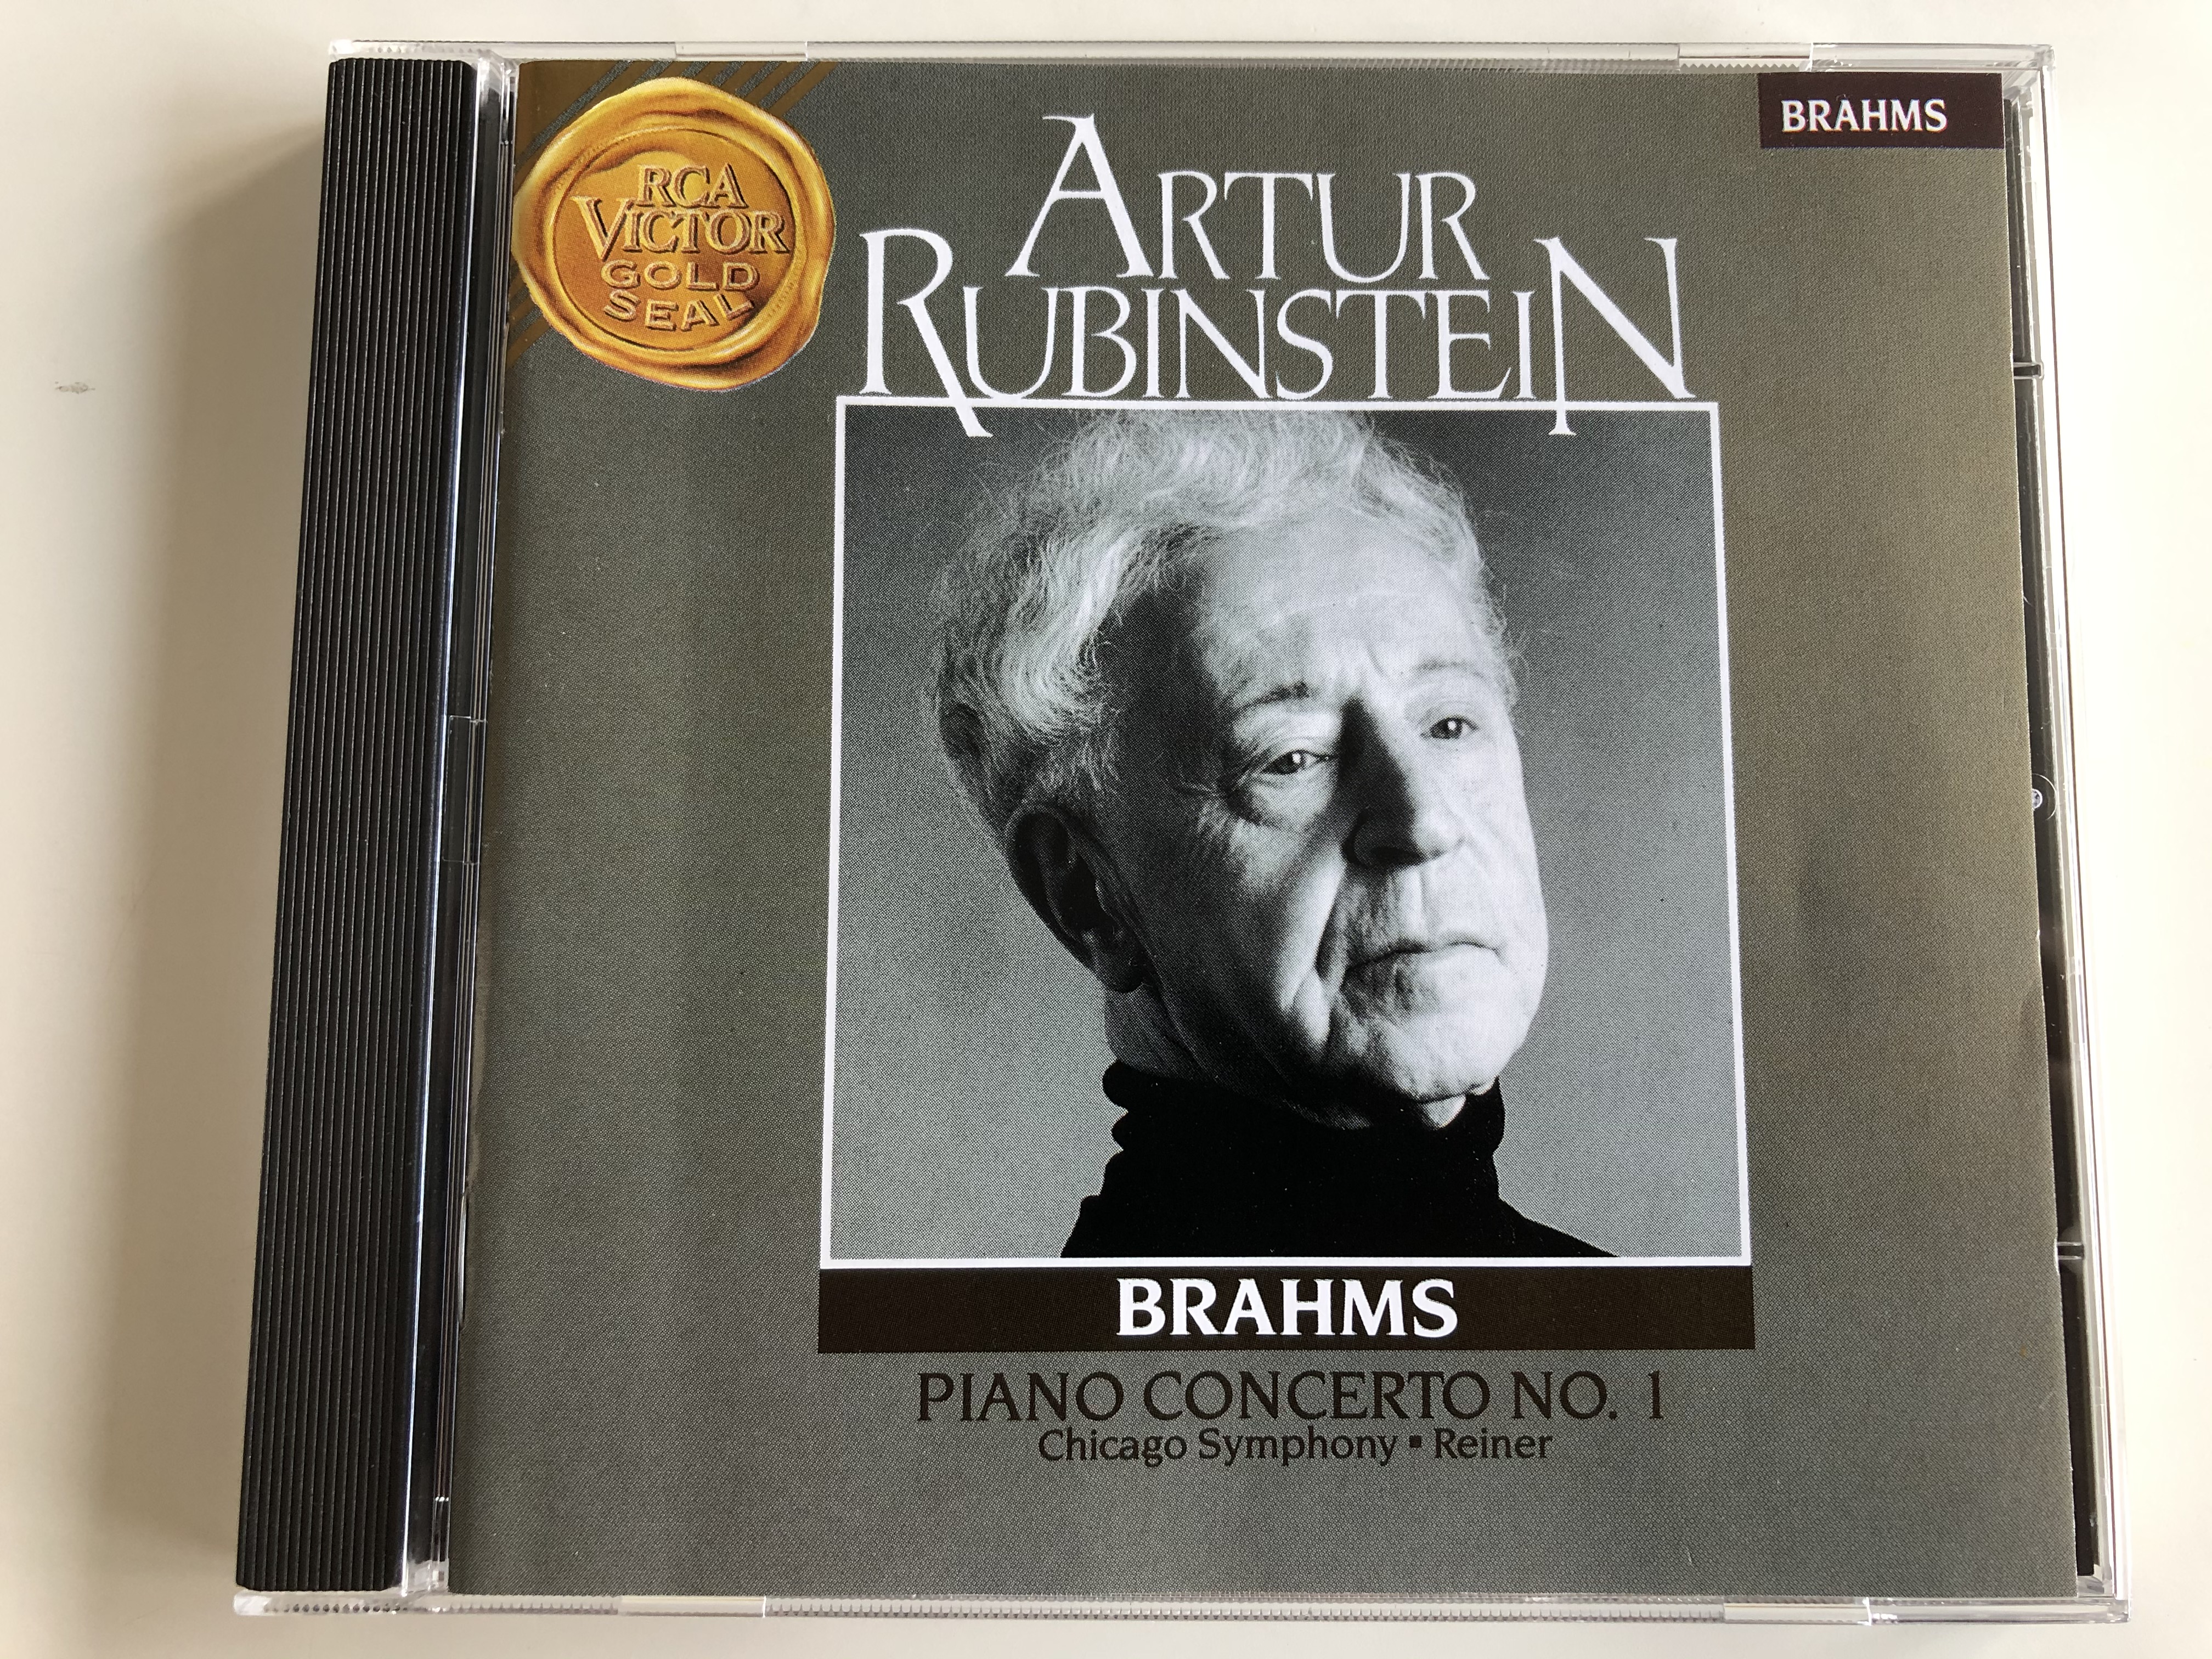 artur-rubinstein-brahms-piano-concerto-no.-1-chicago-symphony-reiner-bmg-music-1992-09026-61263-2-1-.jpg